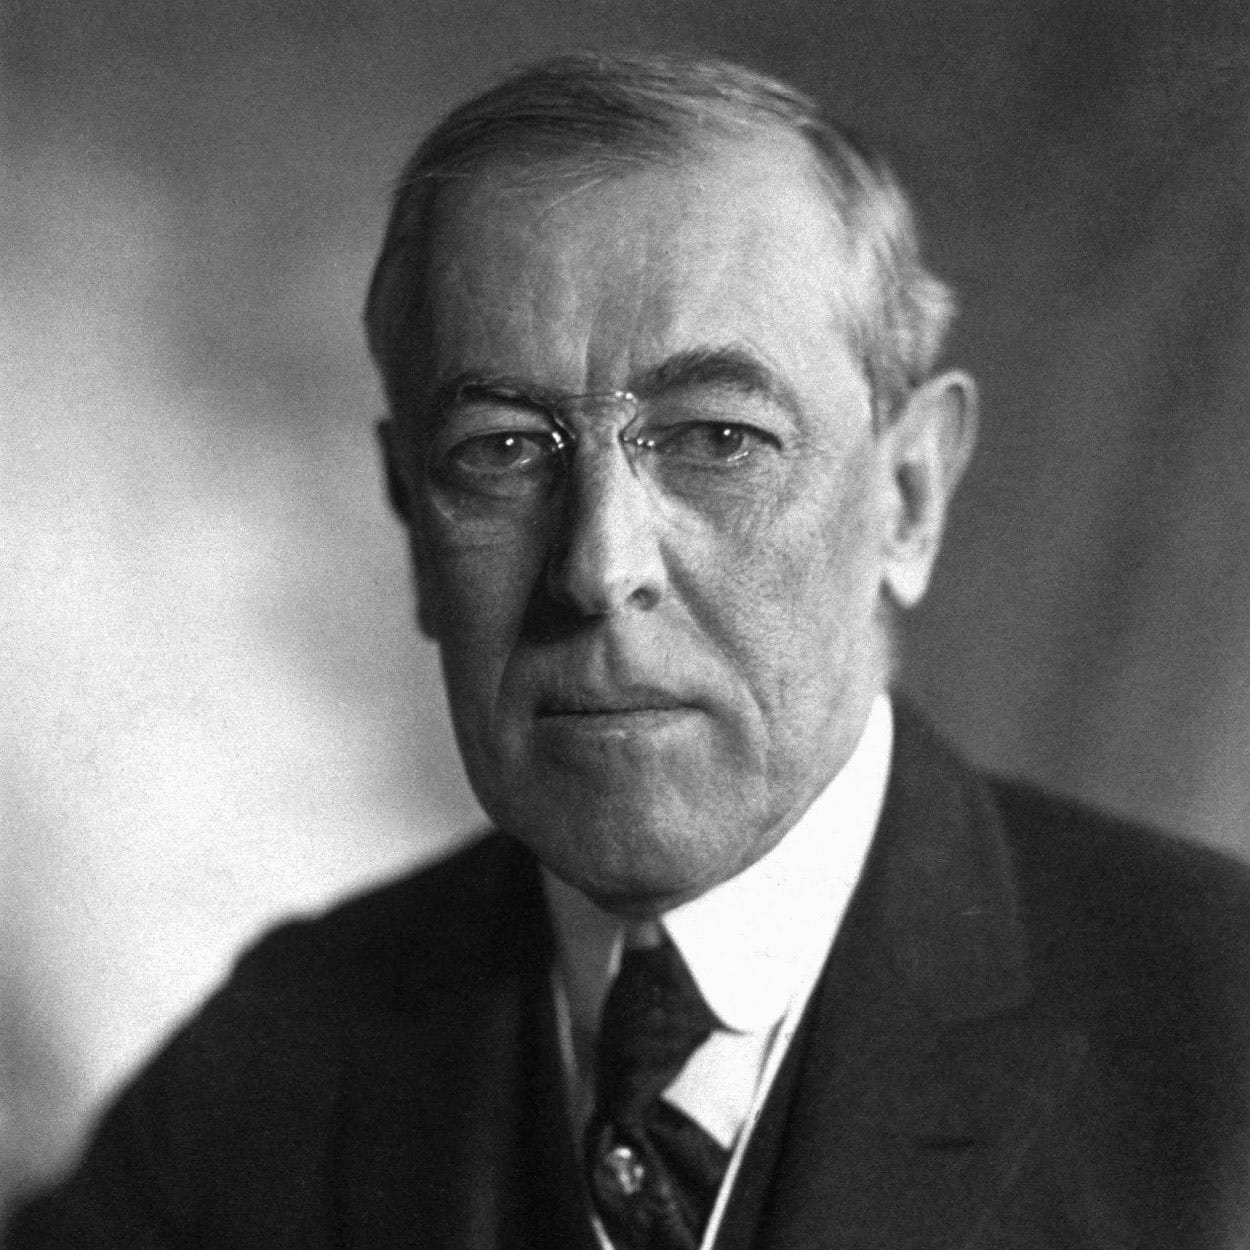 Woodrow Wilson | The White House